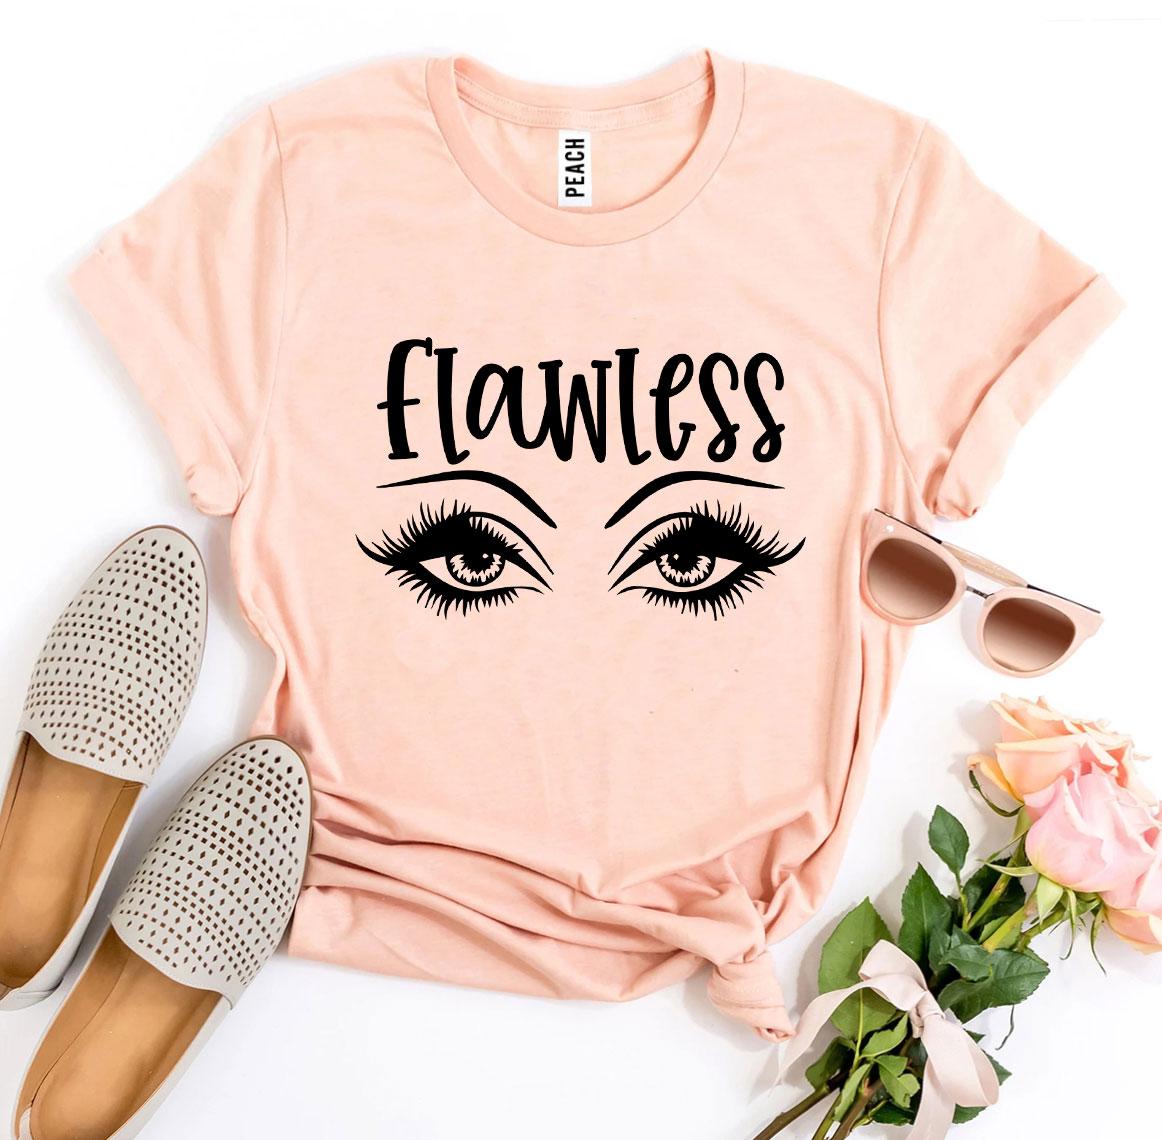 Flawless T-shirt